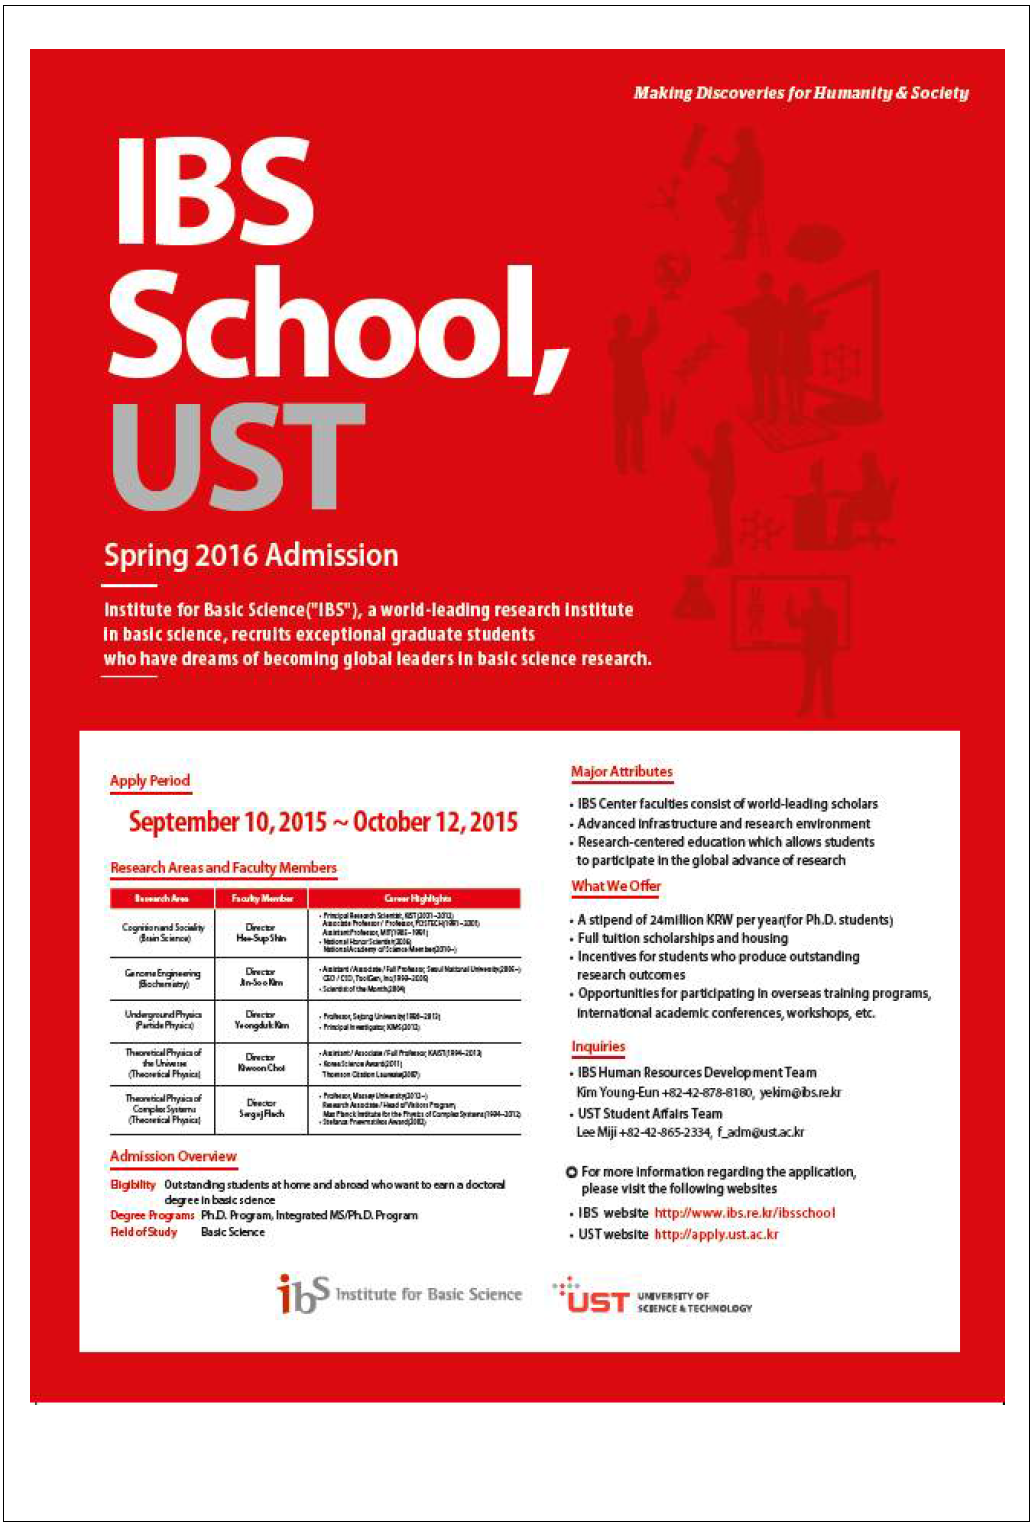 IBS School, UST 2016 전기 신입생 모집 포스터형 광고(영문)